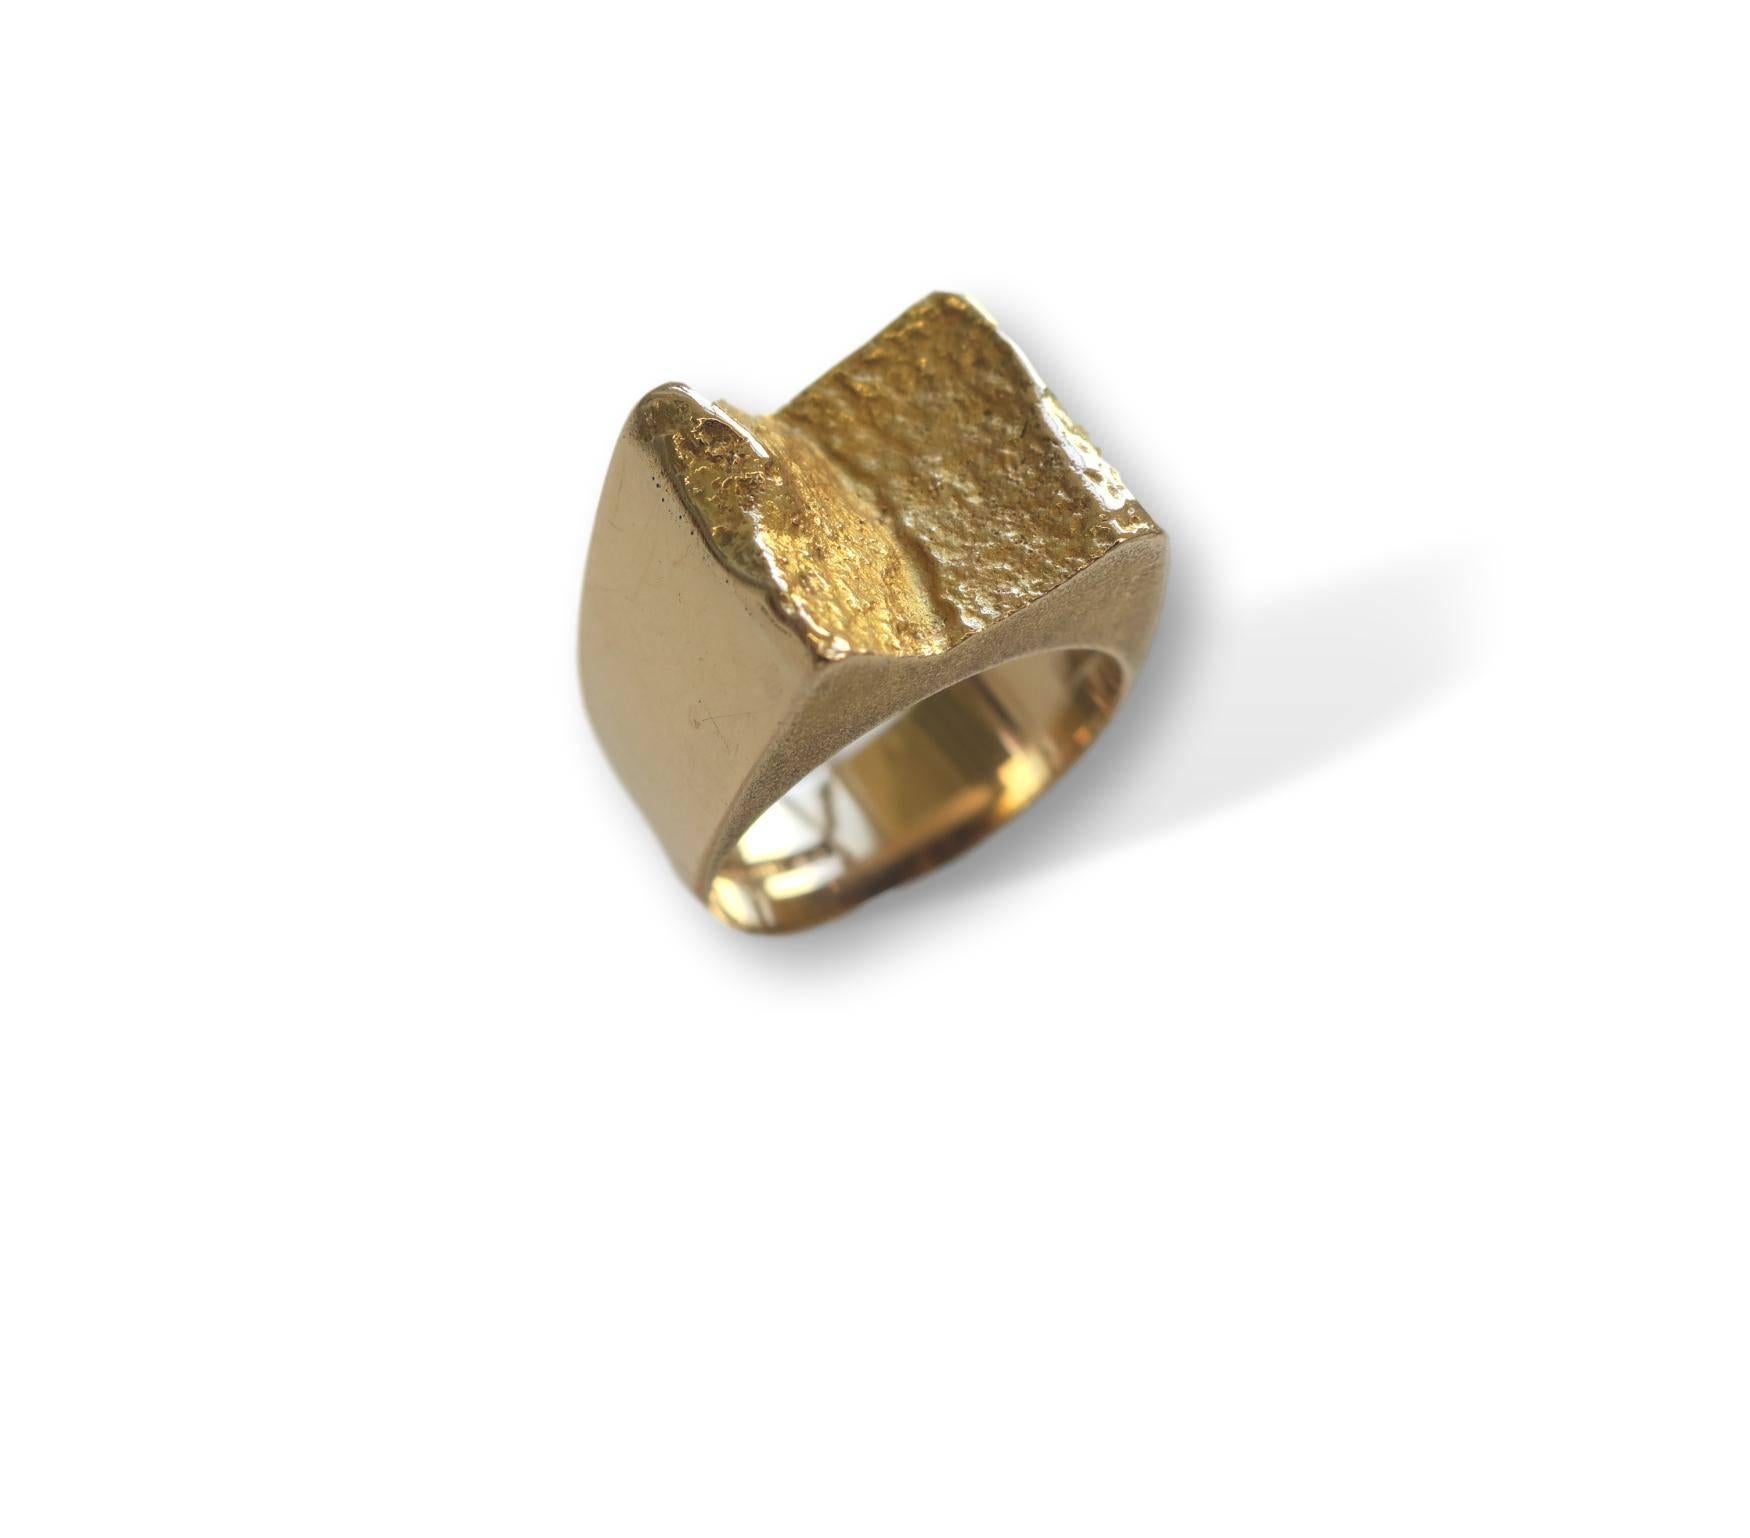 A modernist ring by artist-jeweler Bjorn Weckstrom. A 1/2' x 5/8